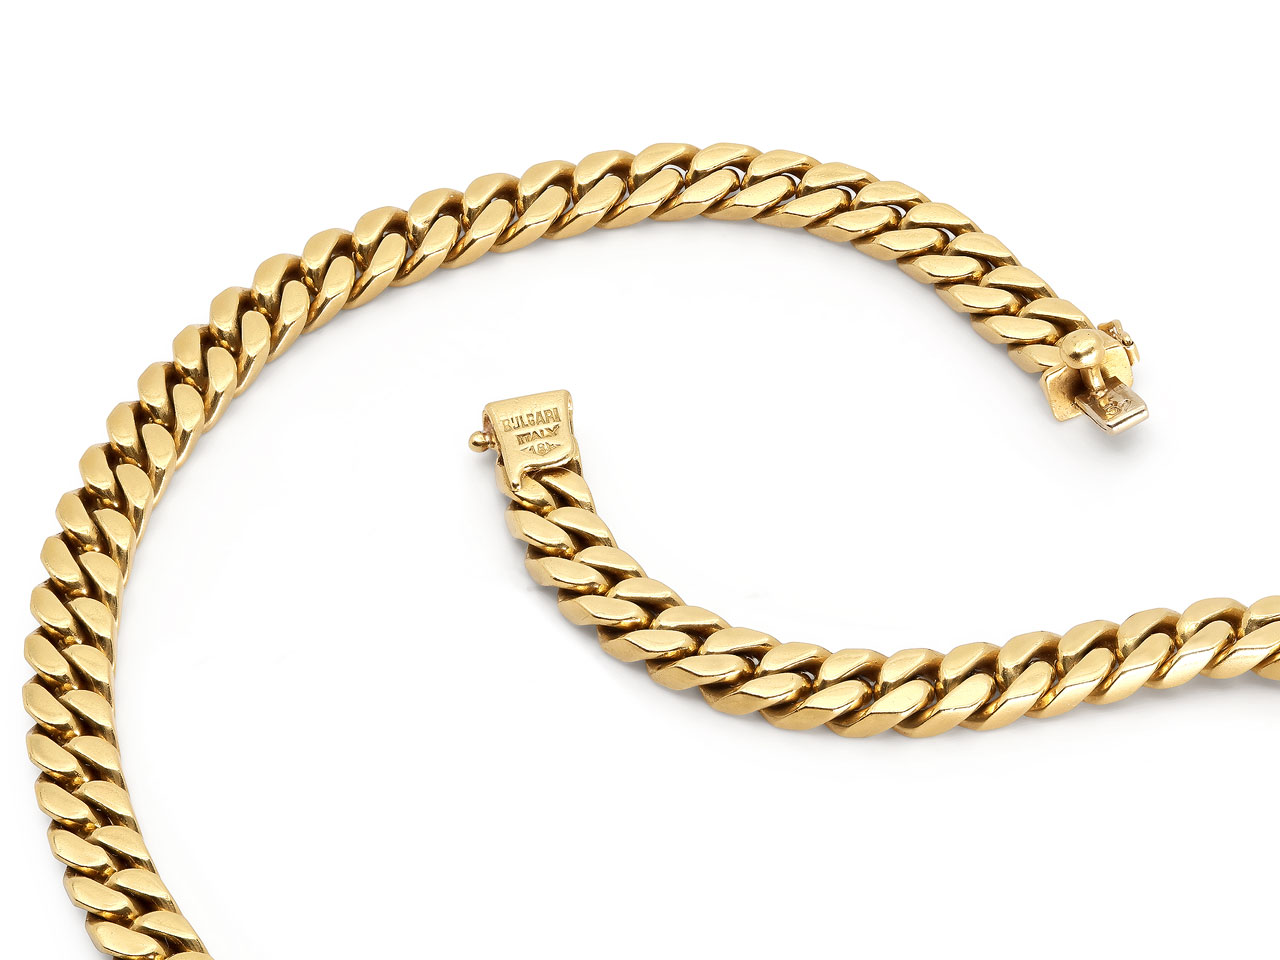 Bulgari Curb Link Chain in 18K Gold